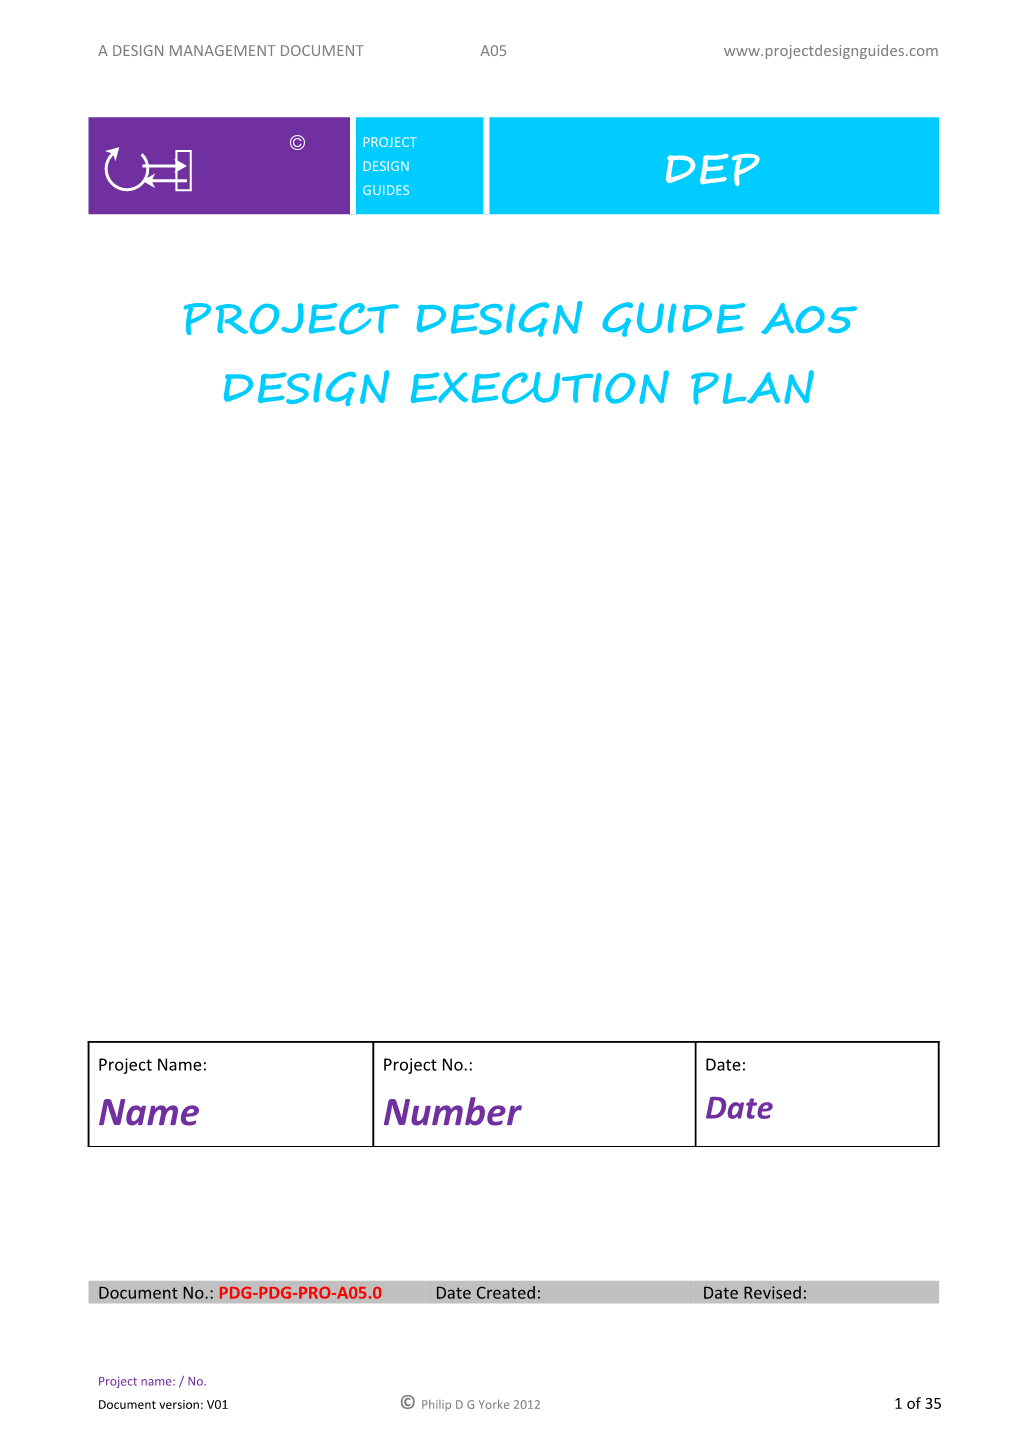 Project Design Guide A05